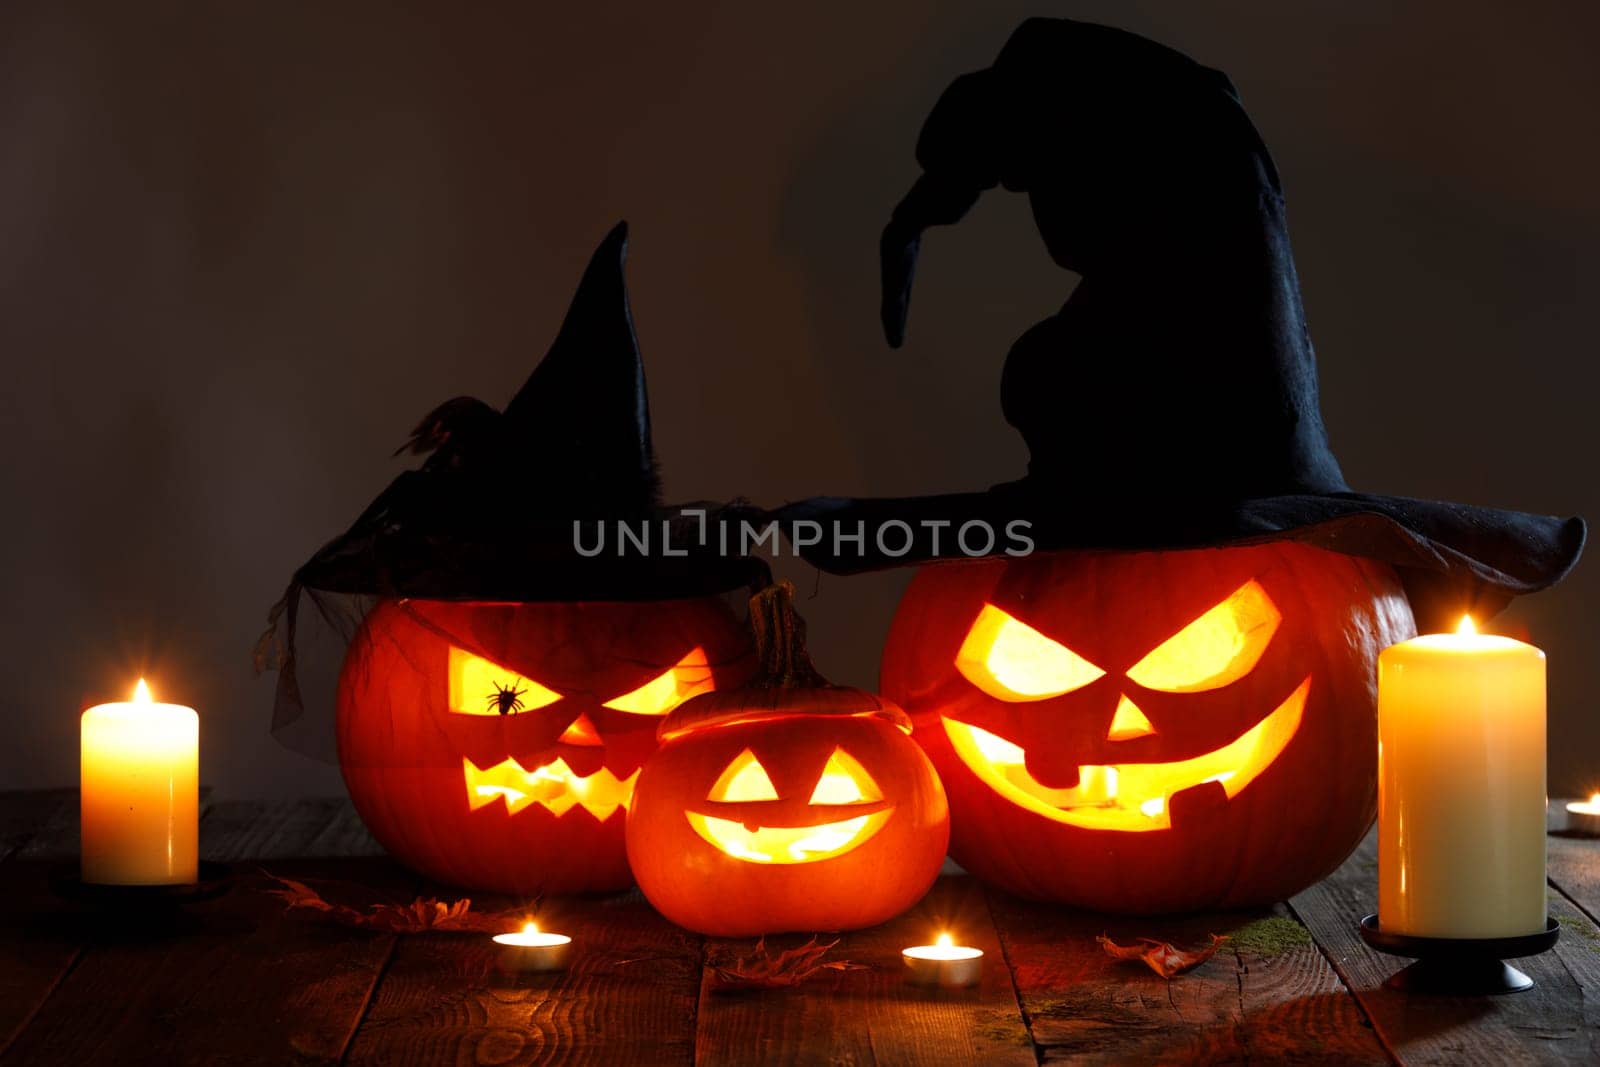 Halloween pumpkin lanterns by Yellowj